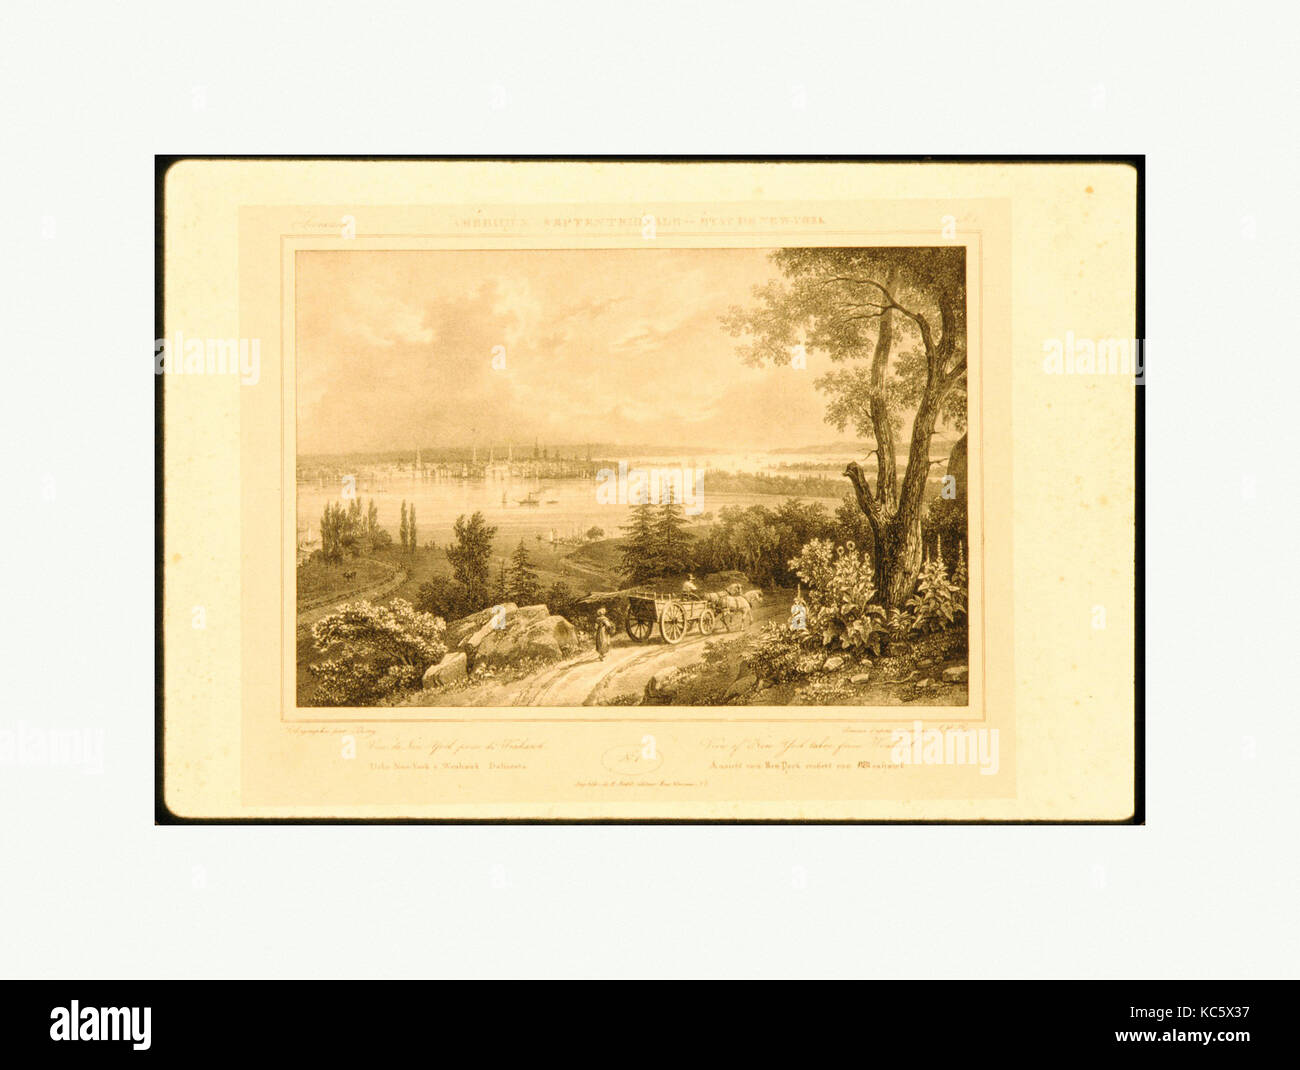 View of New York taken from Weehawken (Amérique Septentionale - État de New-York, plate 1), Isidore-Laurent Deroy, 1826 Stock Photo